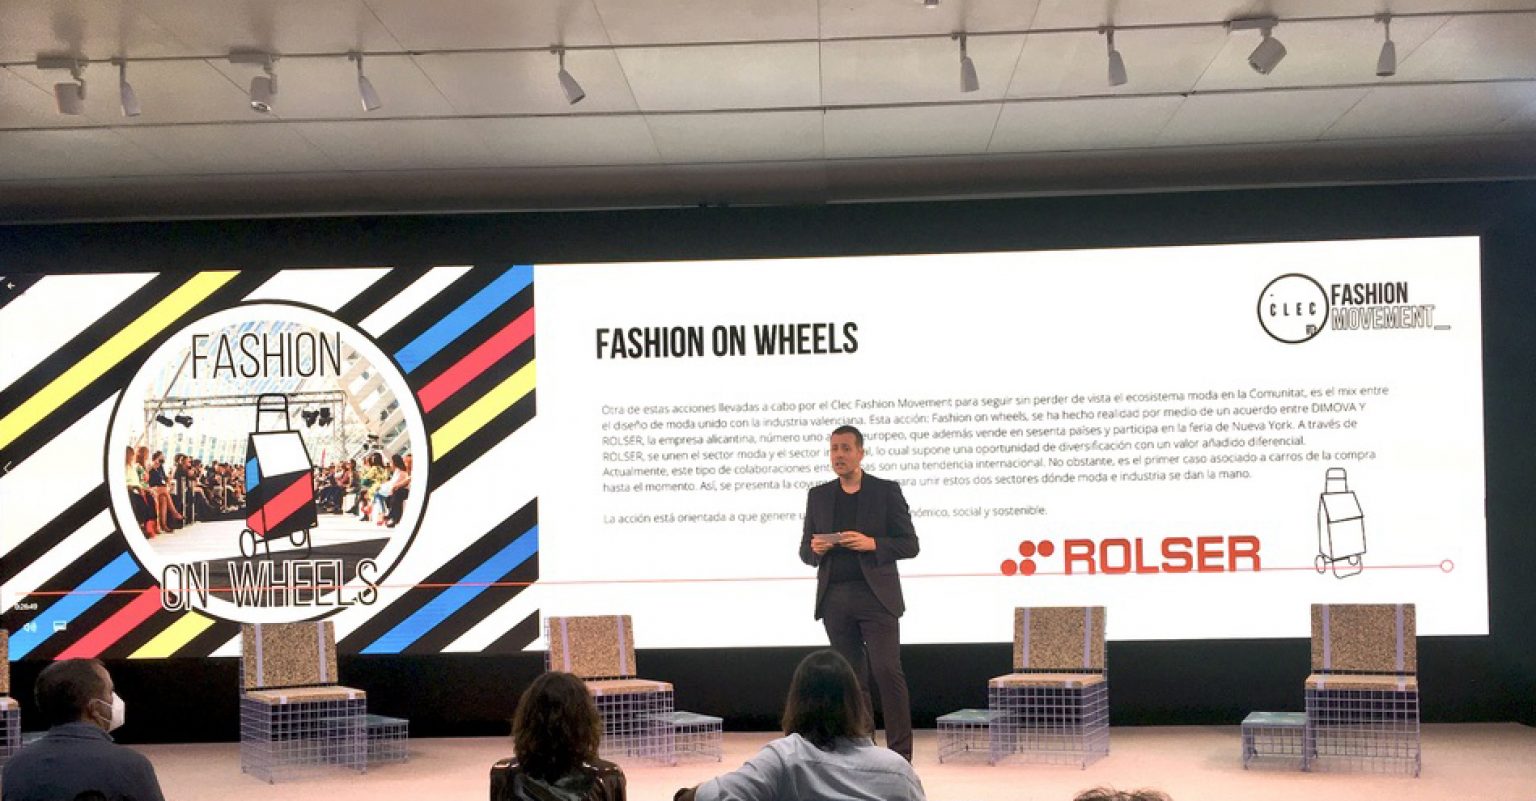 Rolser participará en la pasarela de moda Clec Fashion Movement 2021